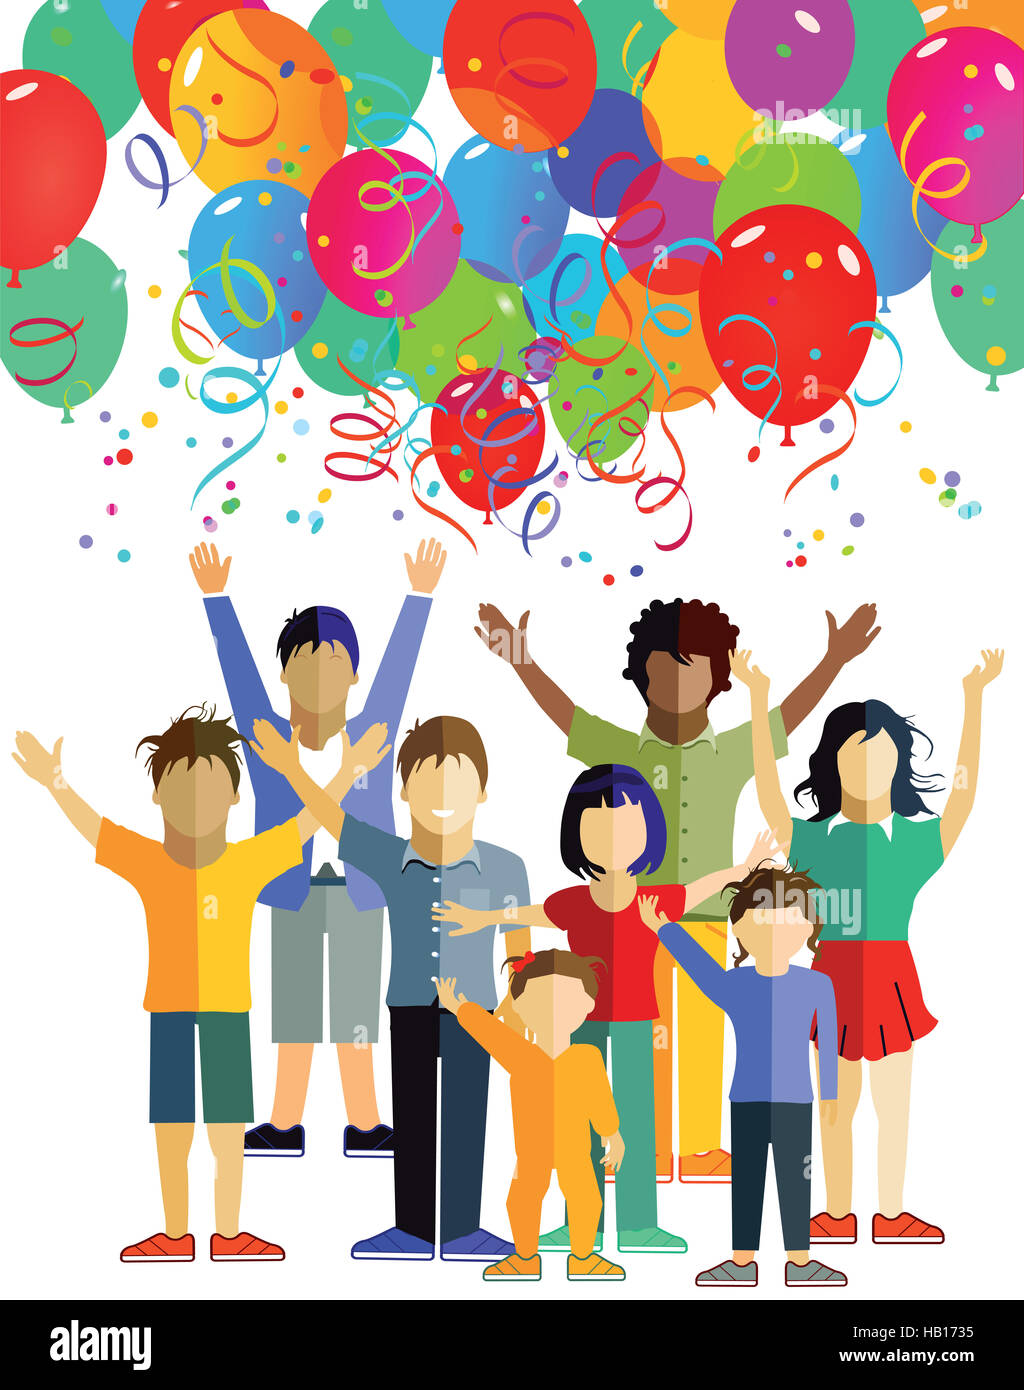 Children celebrate with balloons Stock Photo